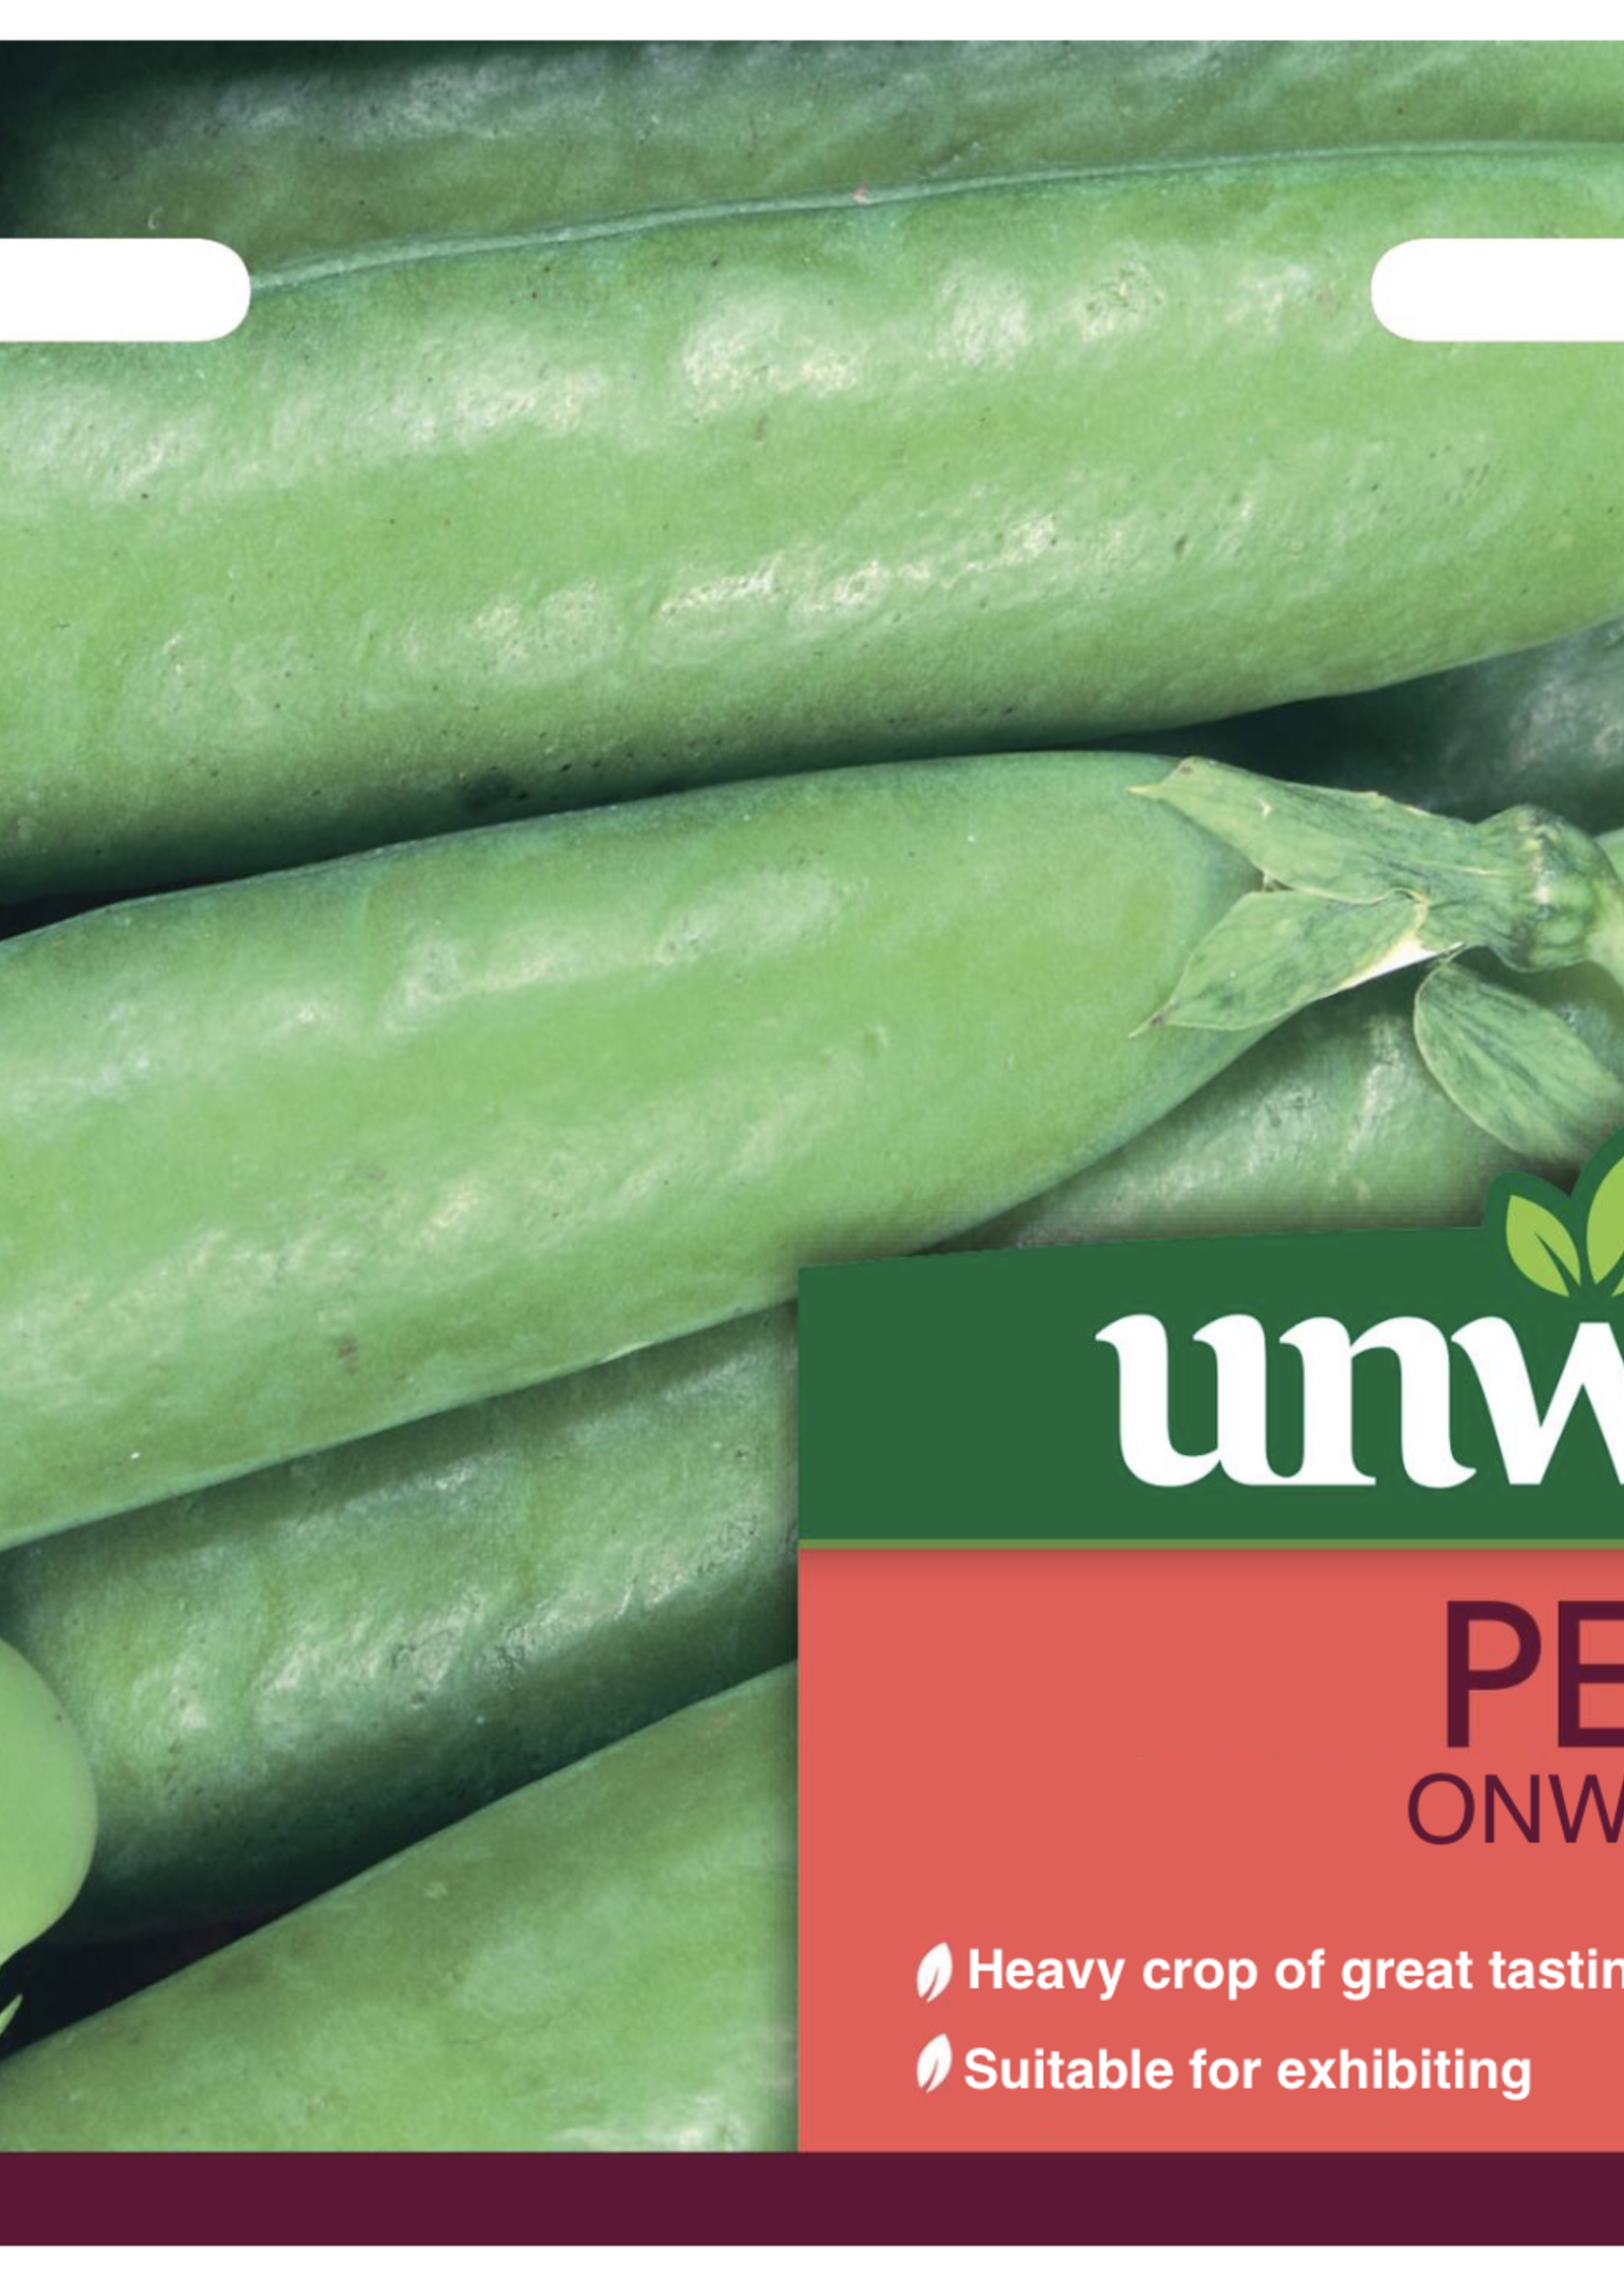 Unwins Pea - Onward